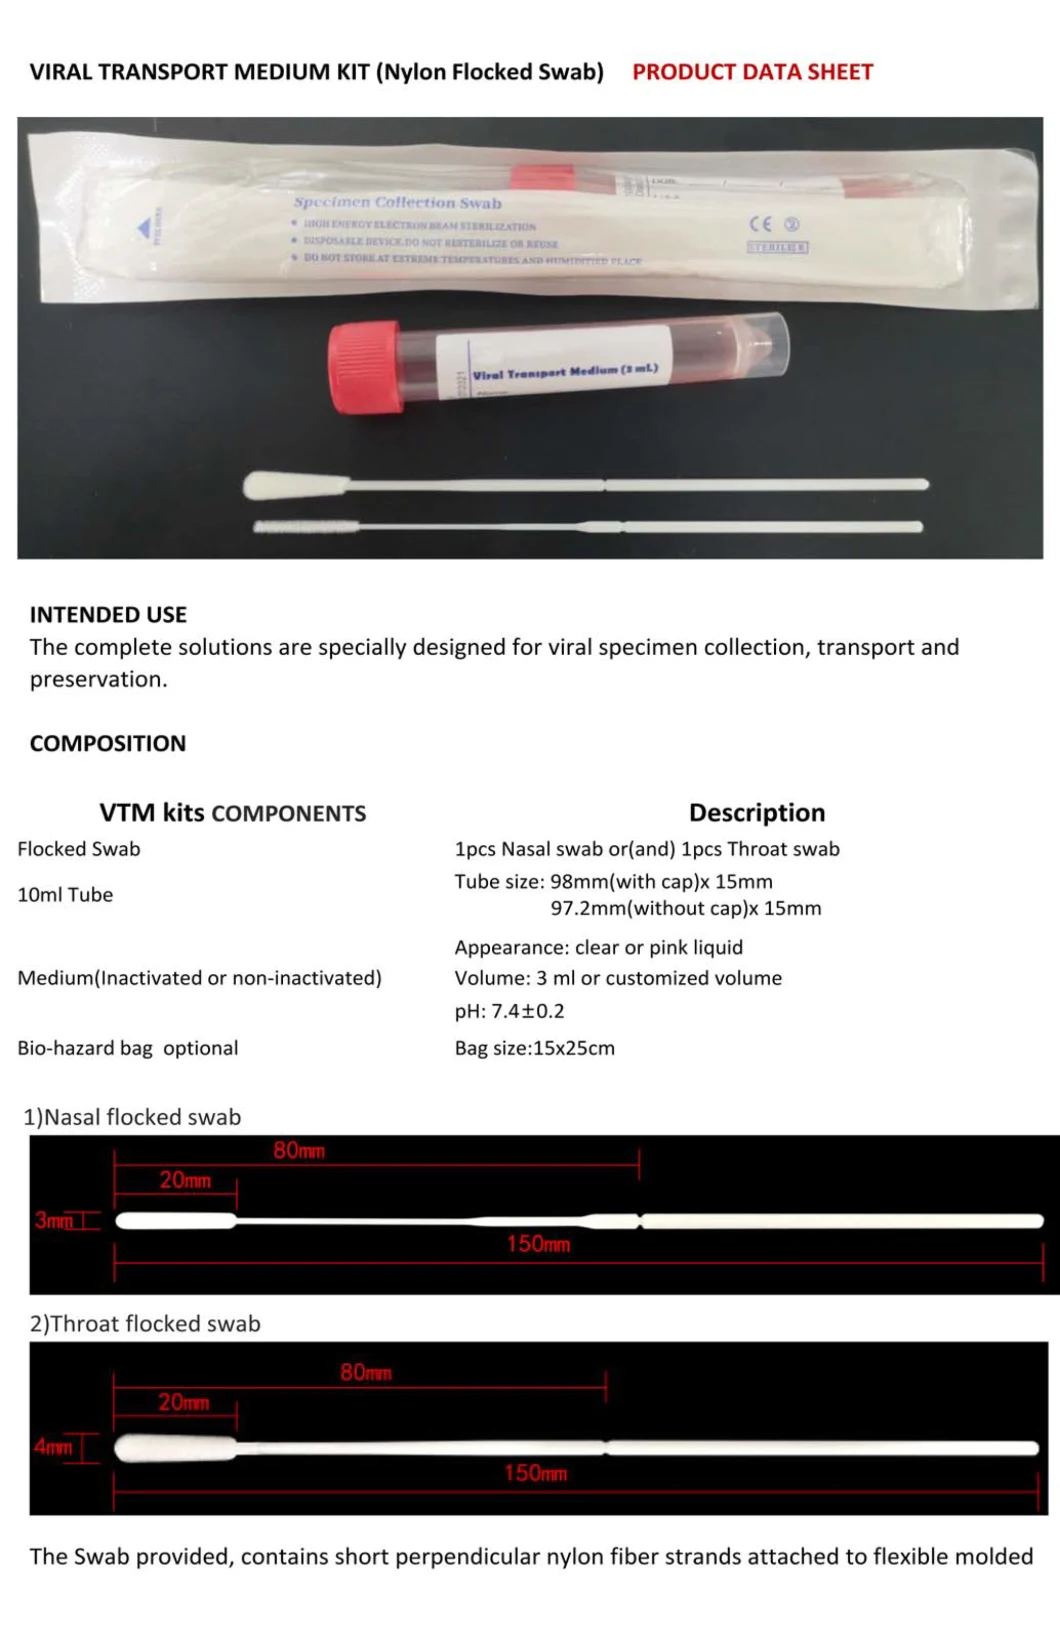 Medical Disposable Sterile Nasal Virus Sampling Tube Sample Collection Tube for Throat Swab